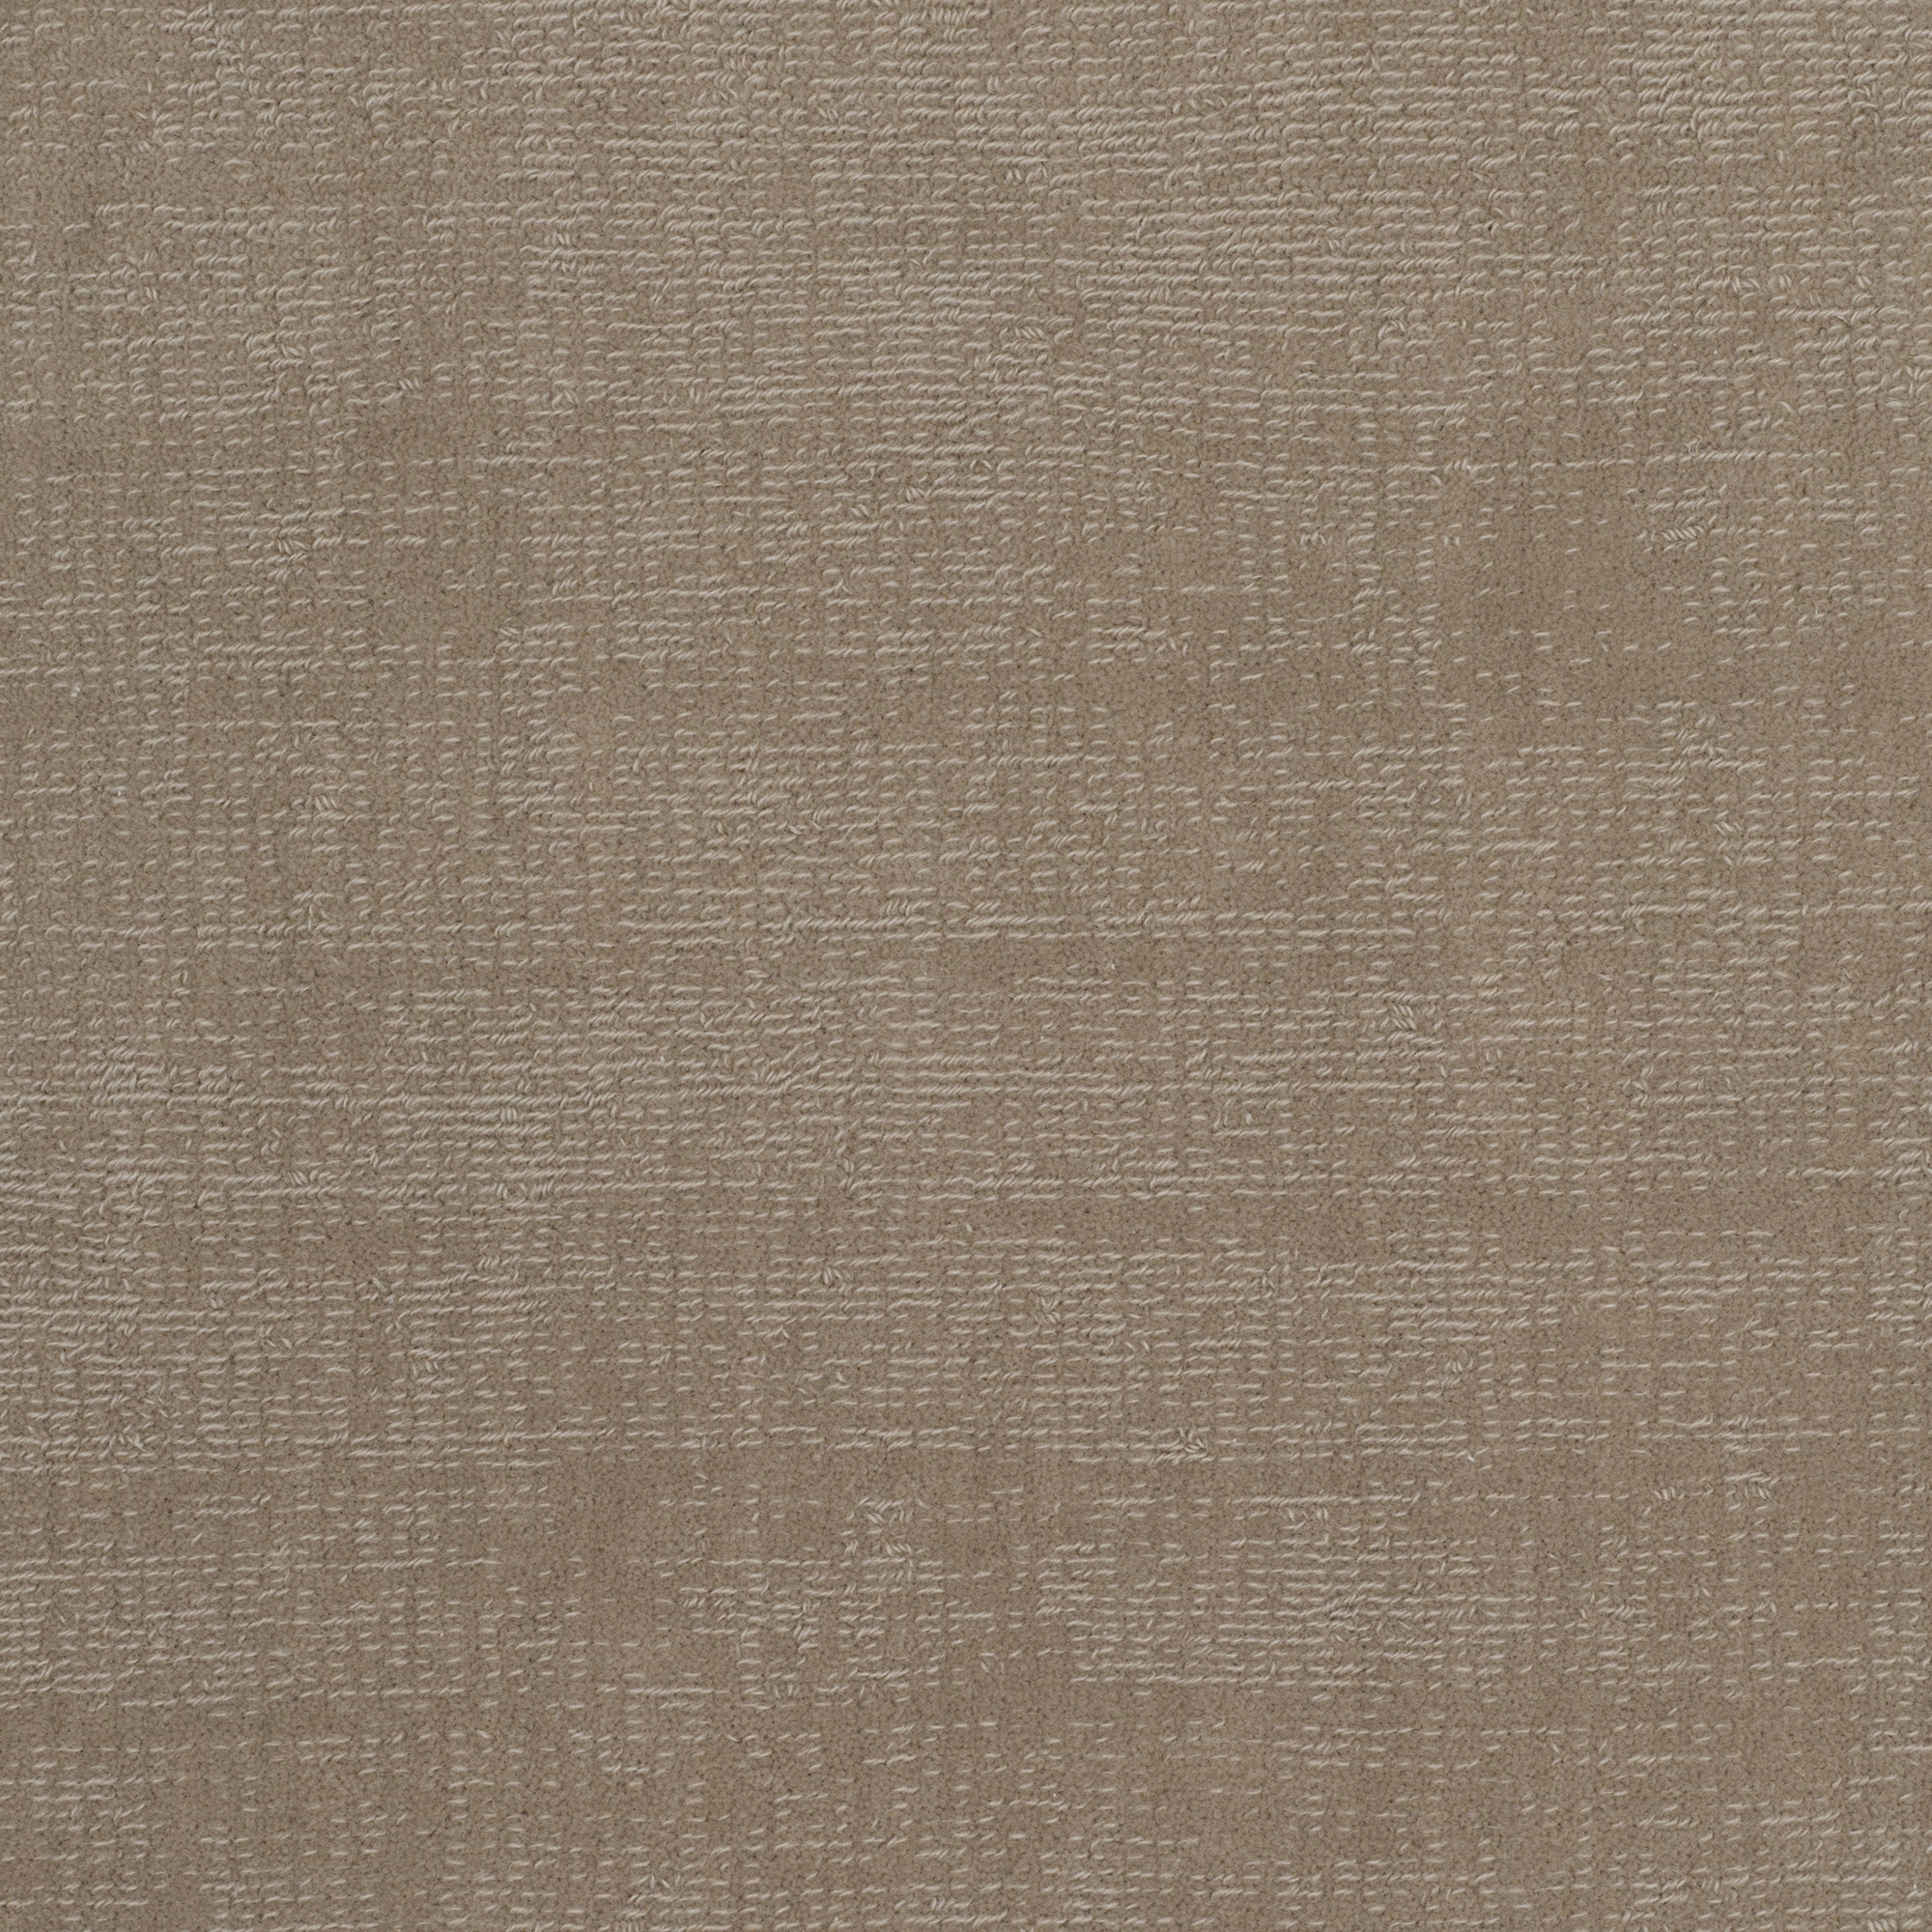 Hampstead: Wheatgrass - 100% Wool Carpet